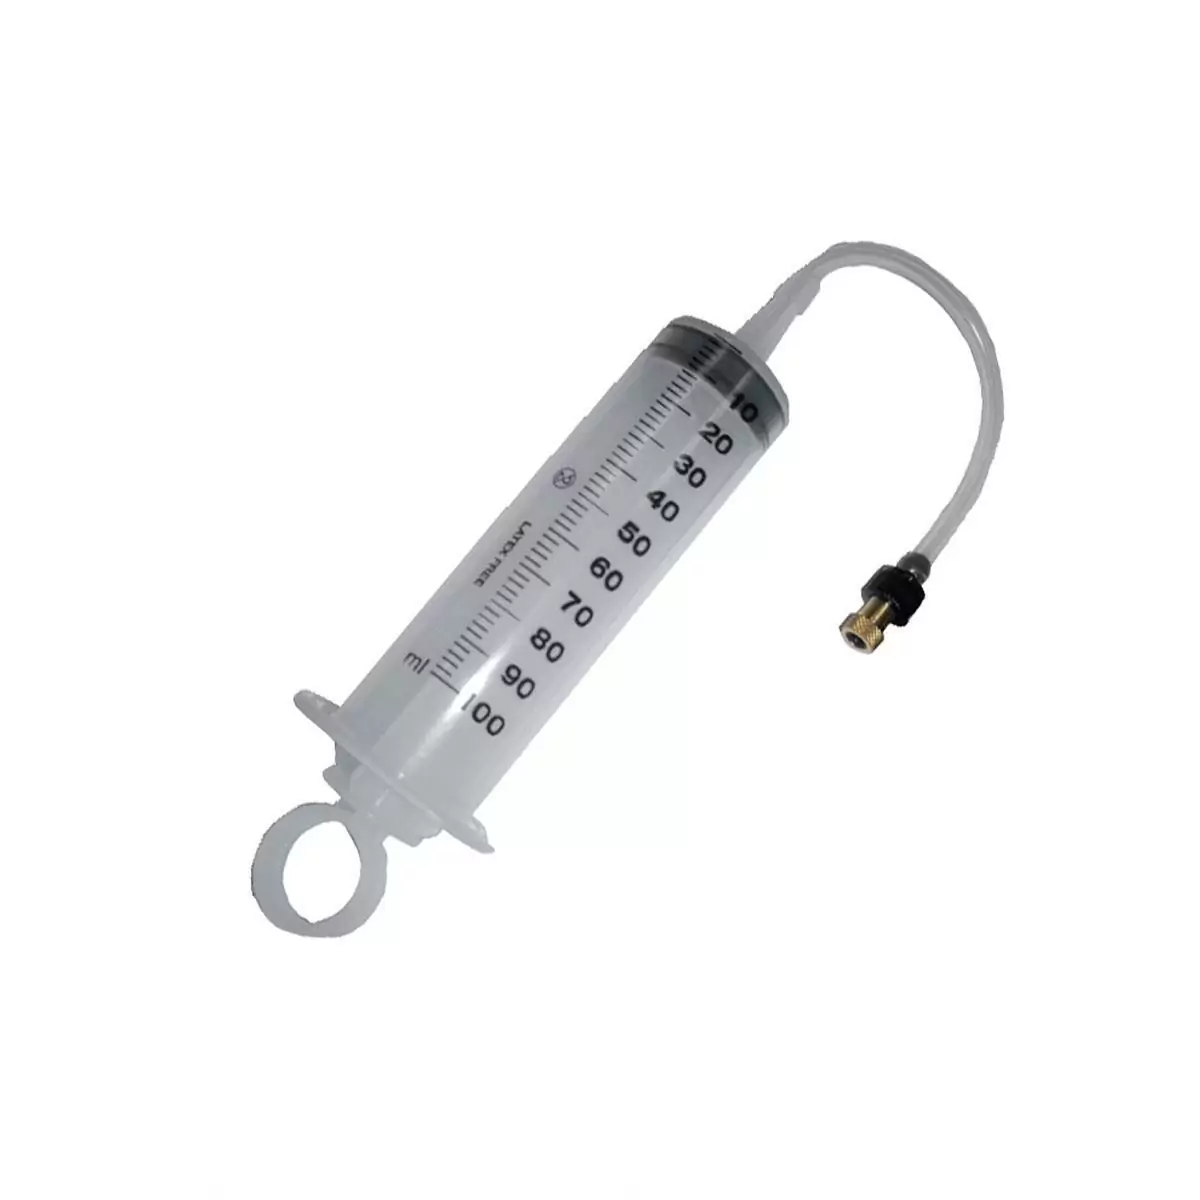 syringe with tube for tire sealant 100ml - image